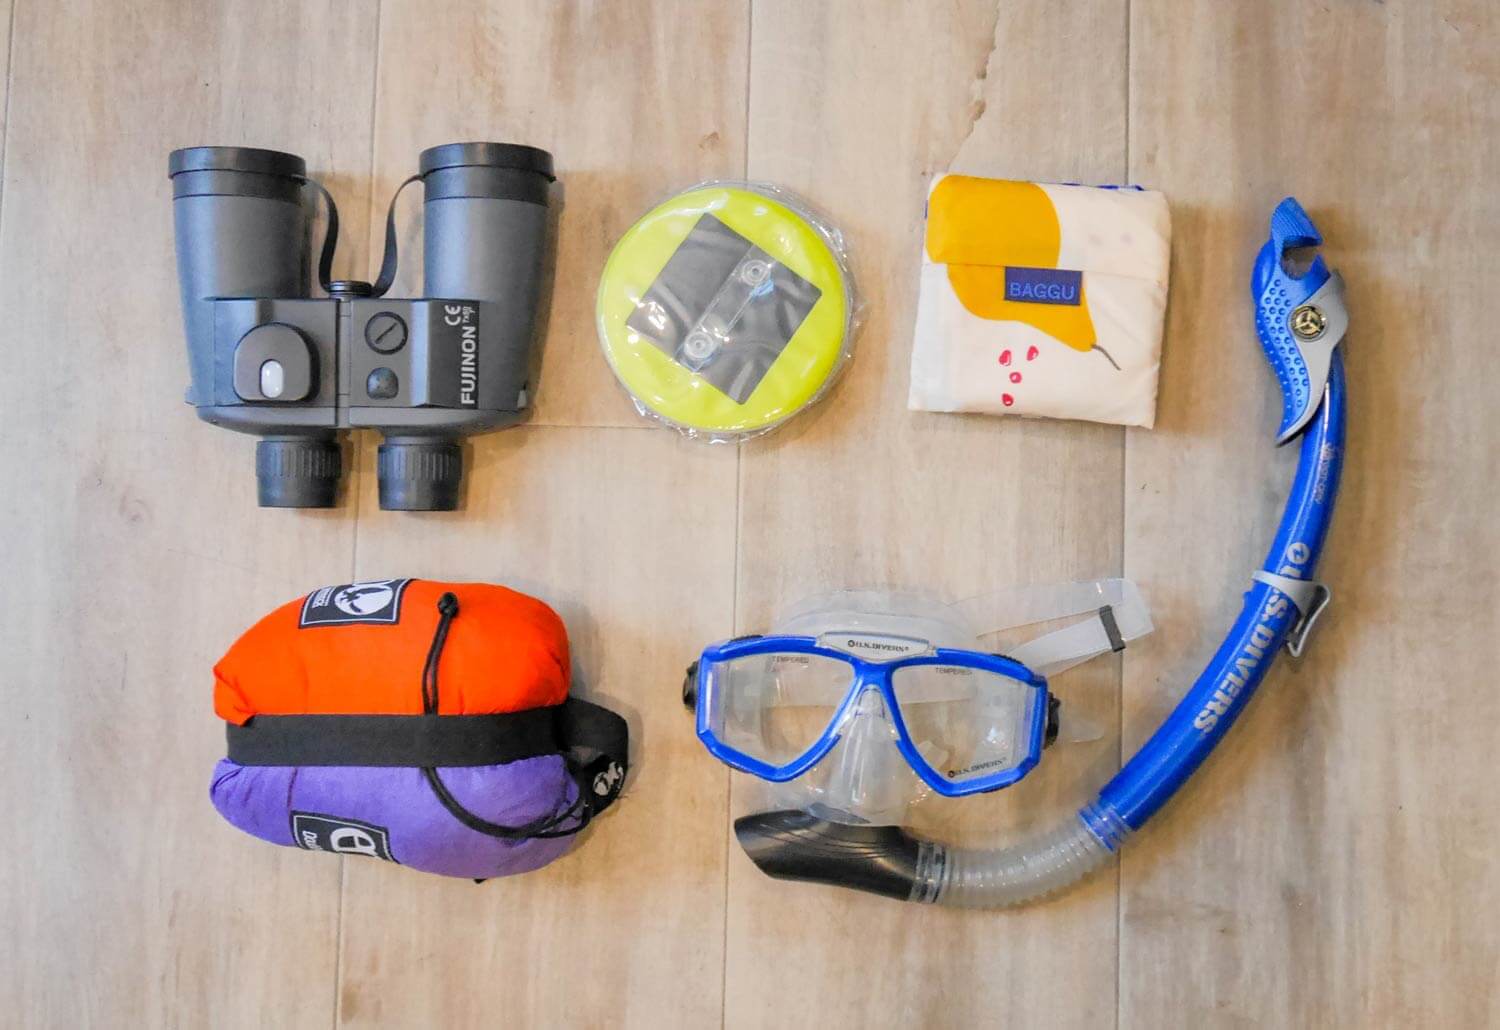 Items for a sailing trip - binoculars, lights, hammock, snorkel mask